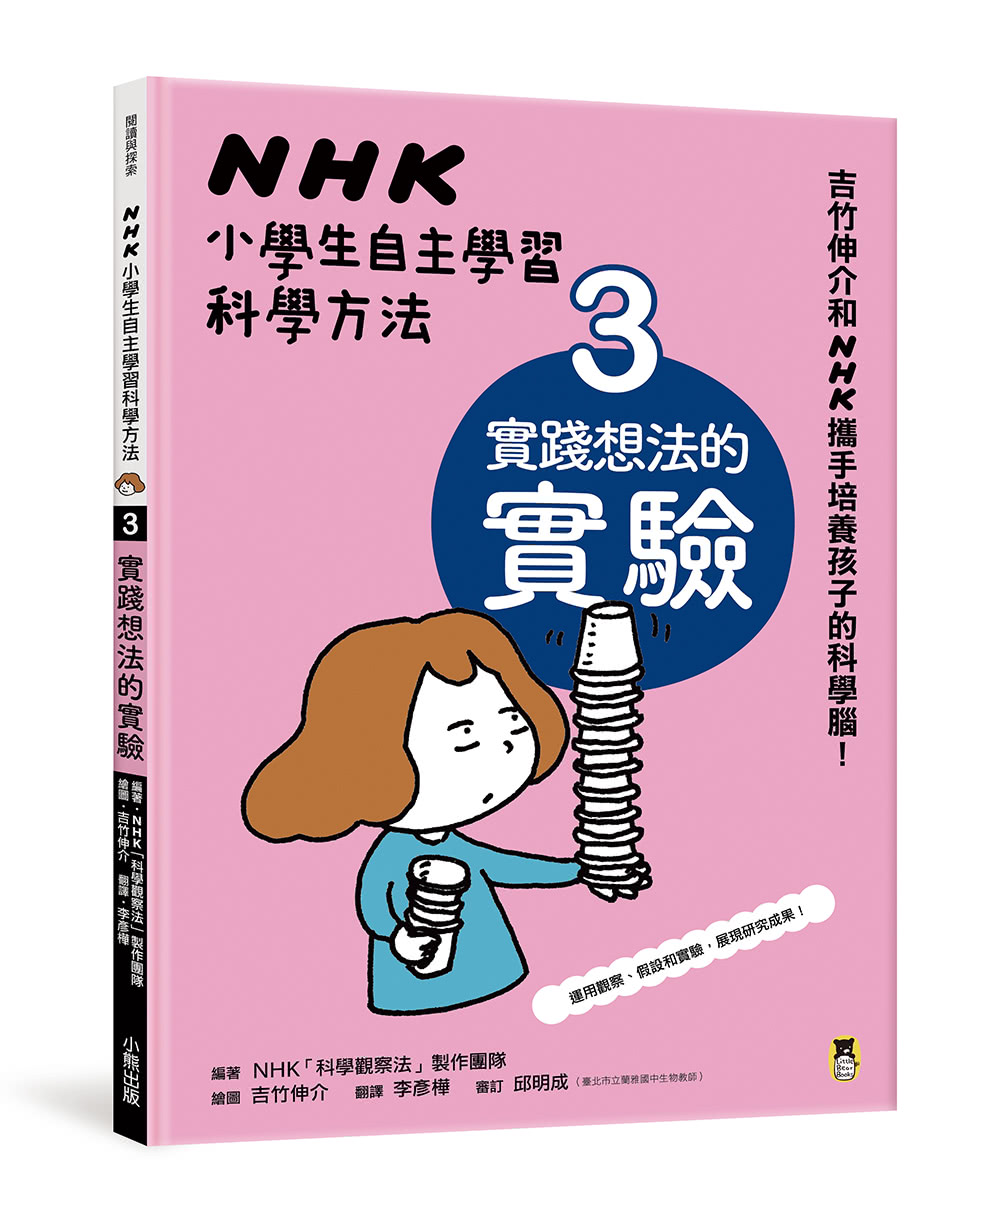 NHK小學生自主學習科學方法（全套3冊）：1.意想不到的觀察、2.膽大心細的假設、3.實踐想法的實驗